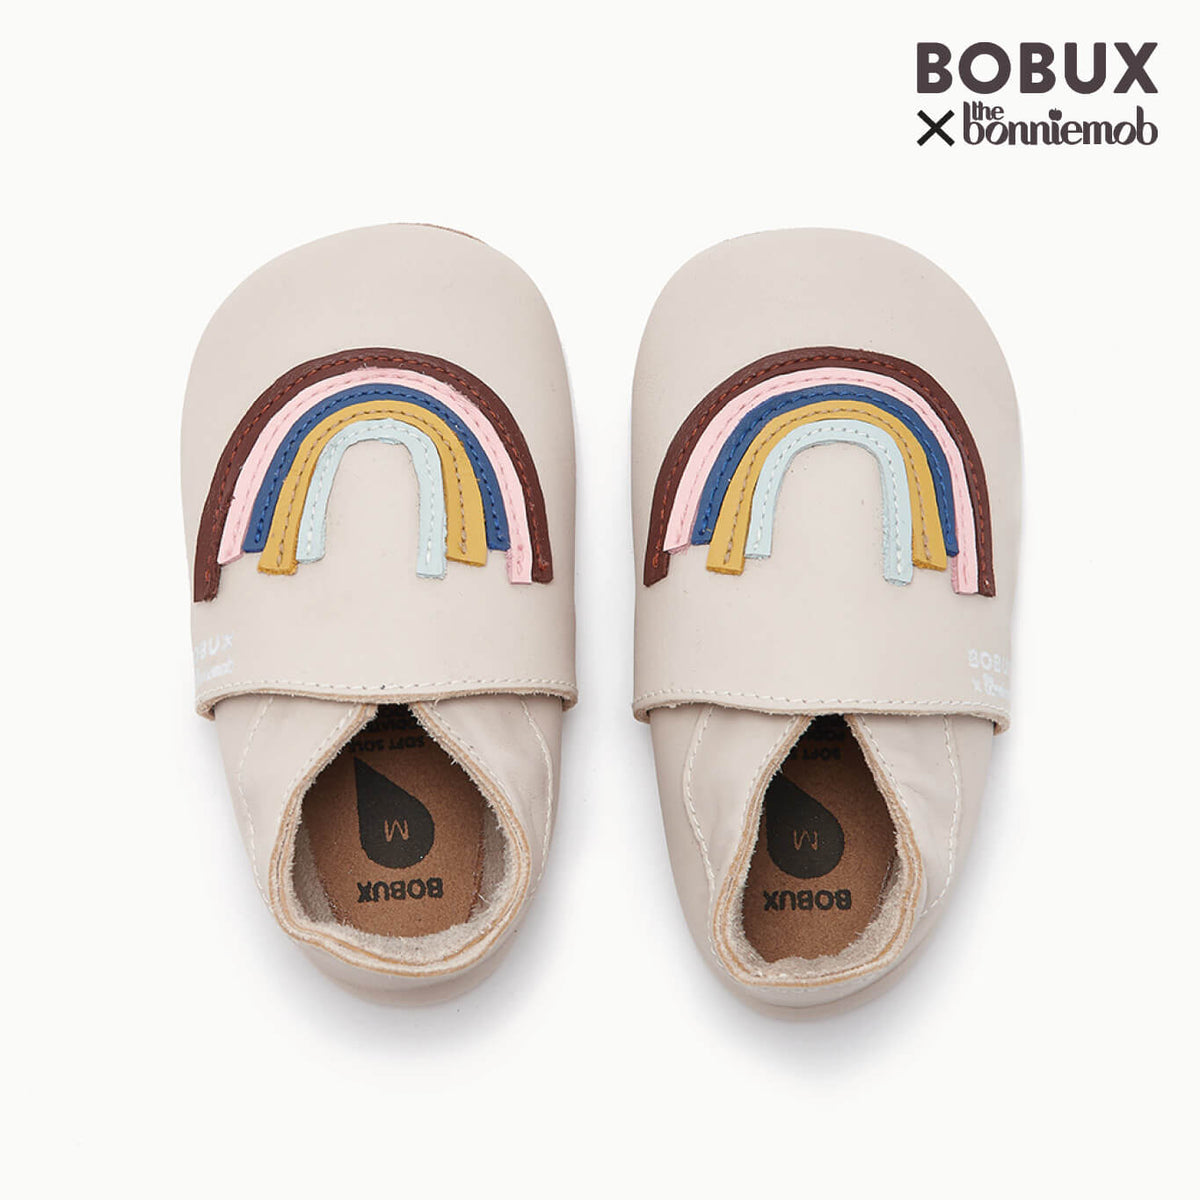 bobux leather baby shoes